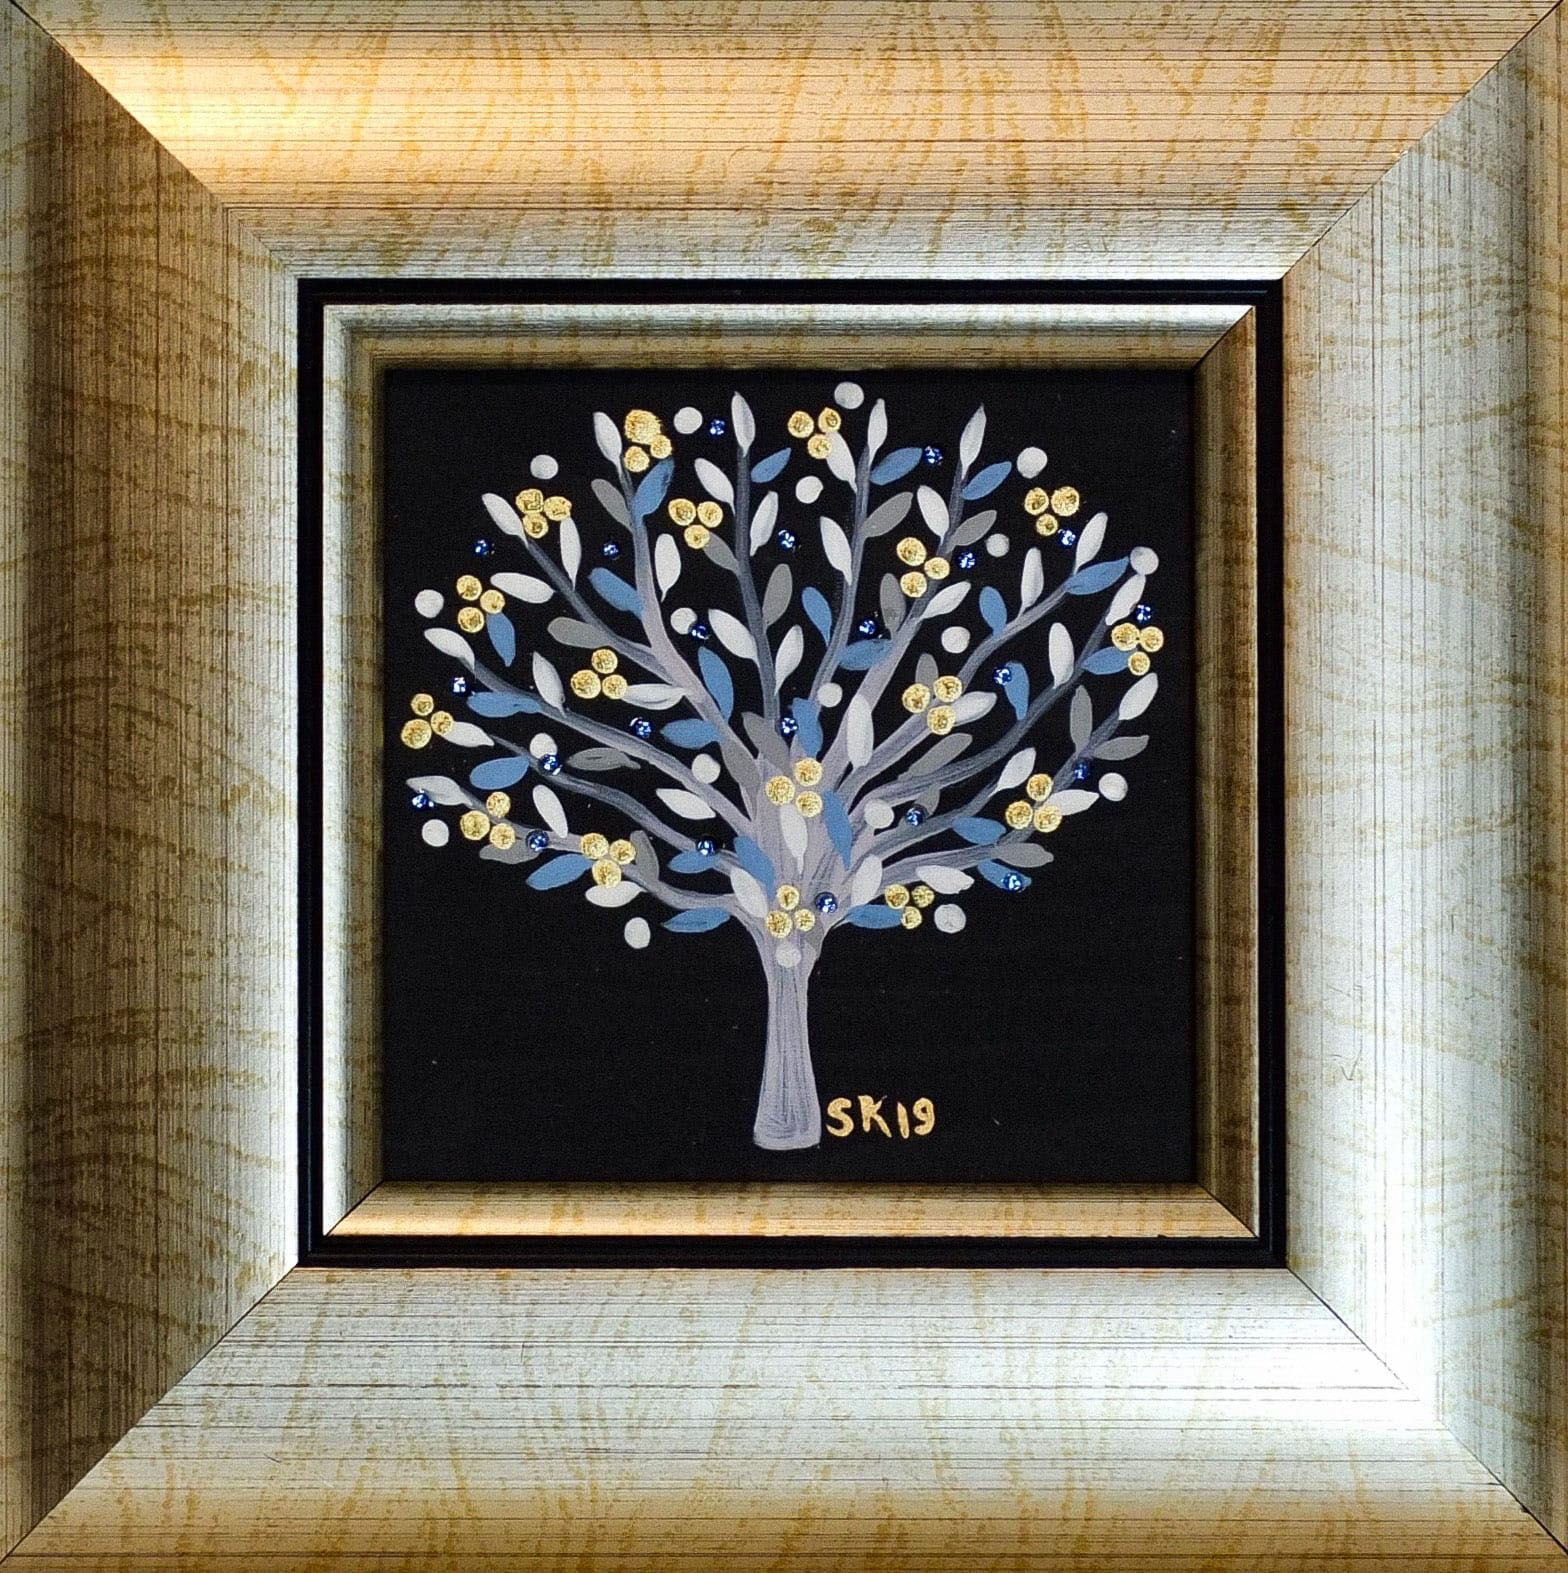 Silvia Karamfilova painting "Tree of life 11"